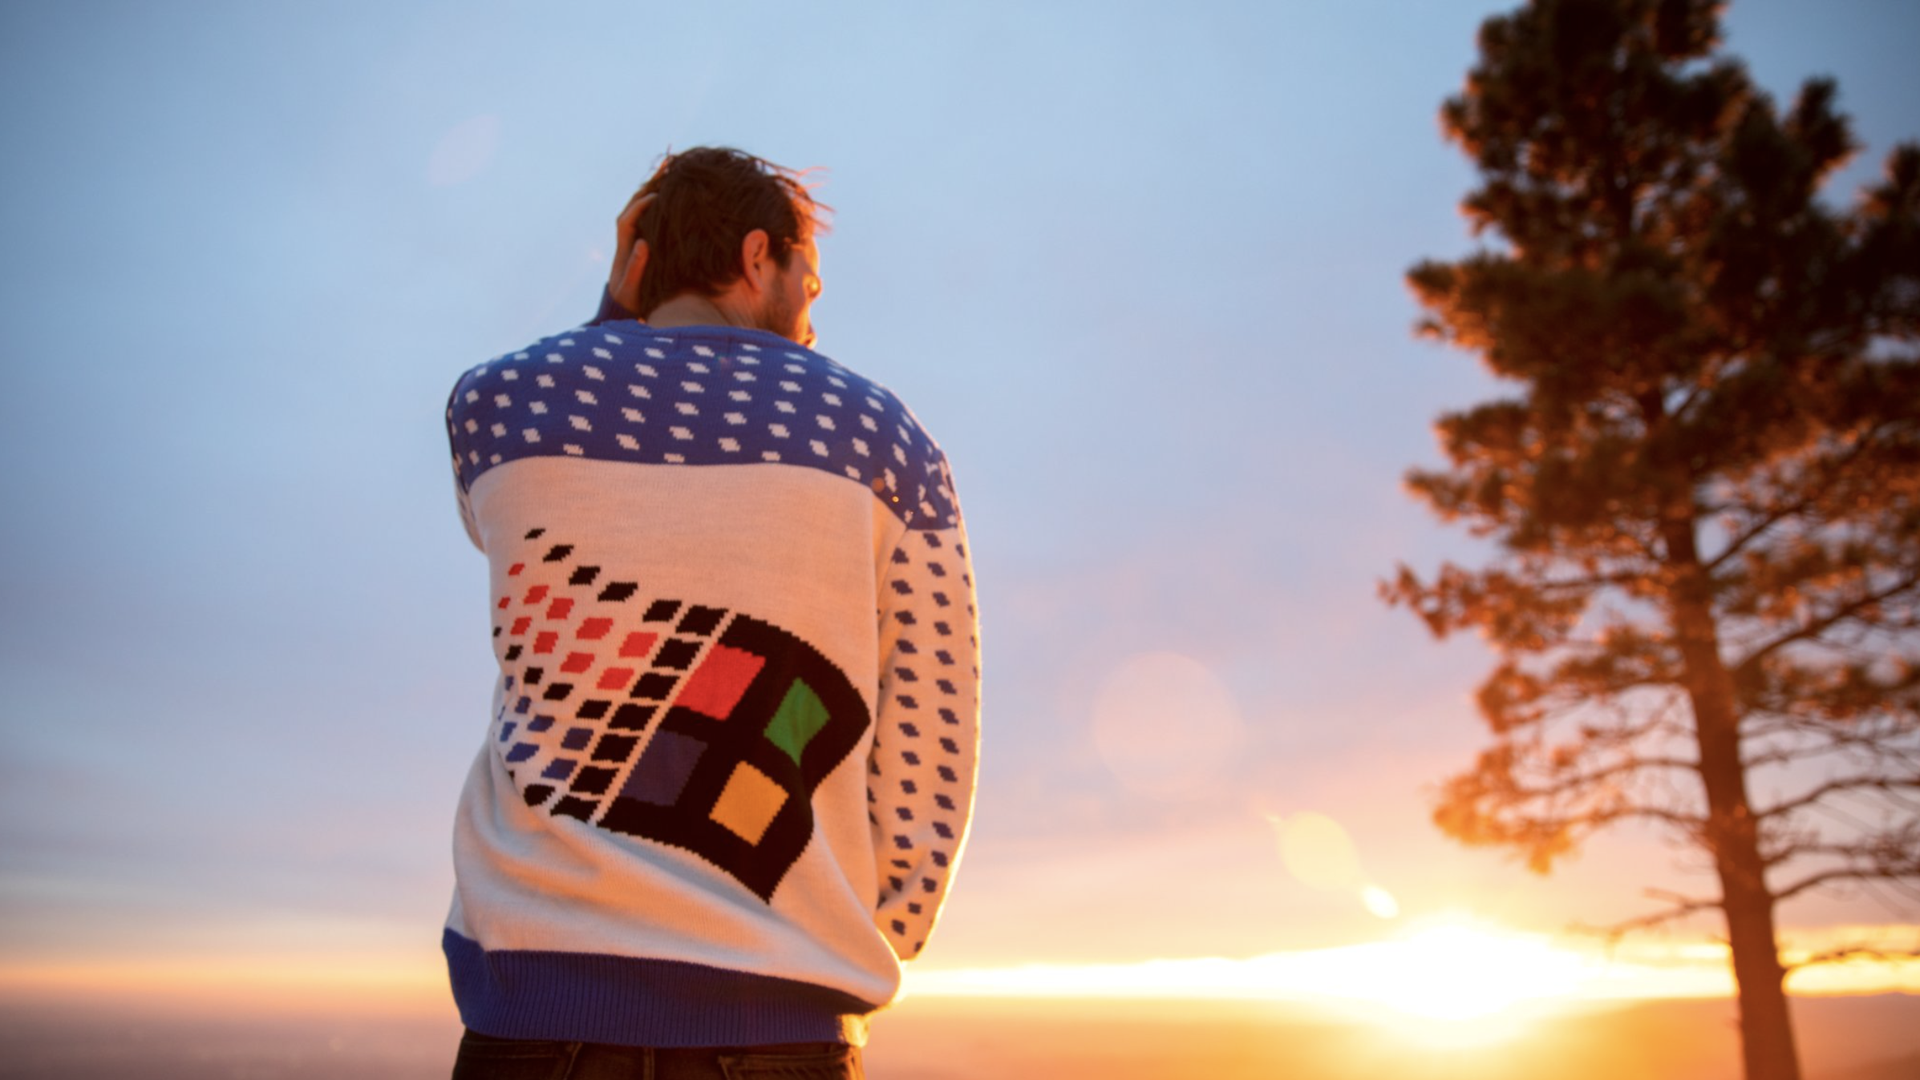 A model wearing a Windows 95 logo-ed ugly sweater